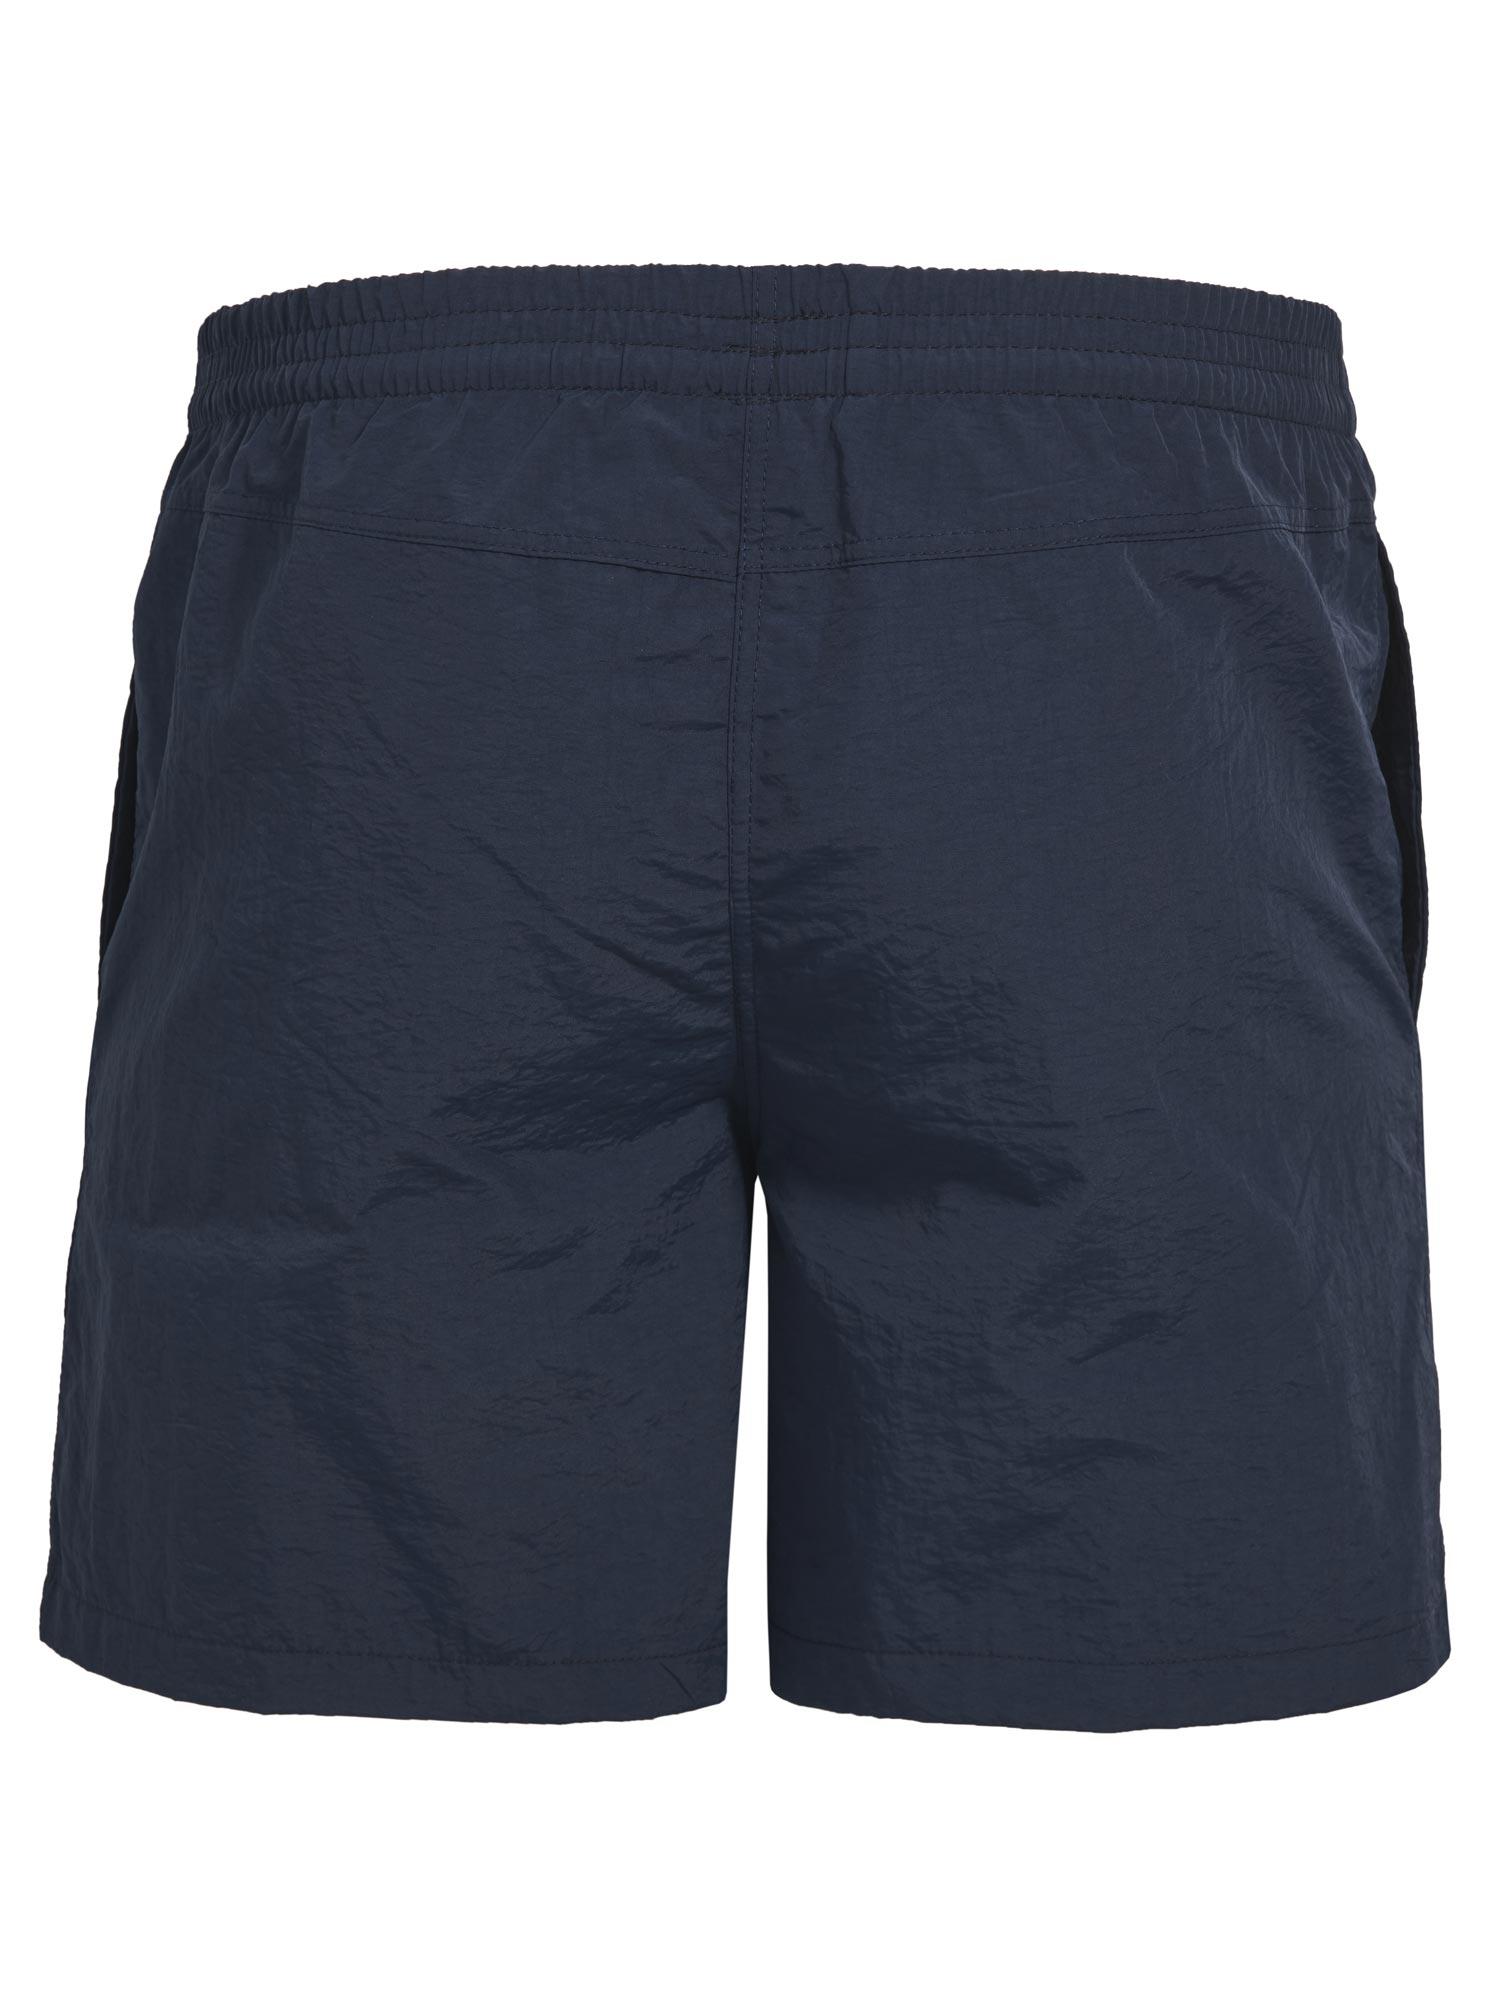 Selected image for BRILLE Muški šorts za kupanje SUNNY BEACH II teget